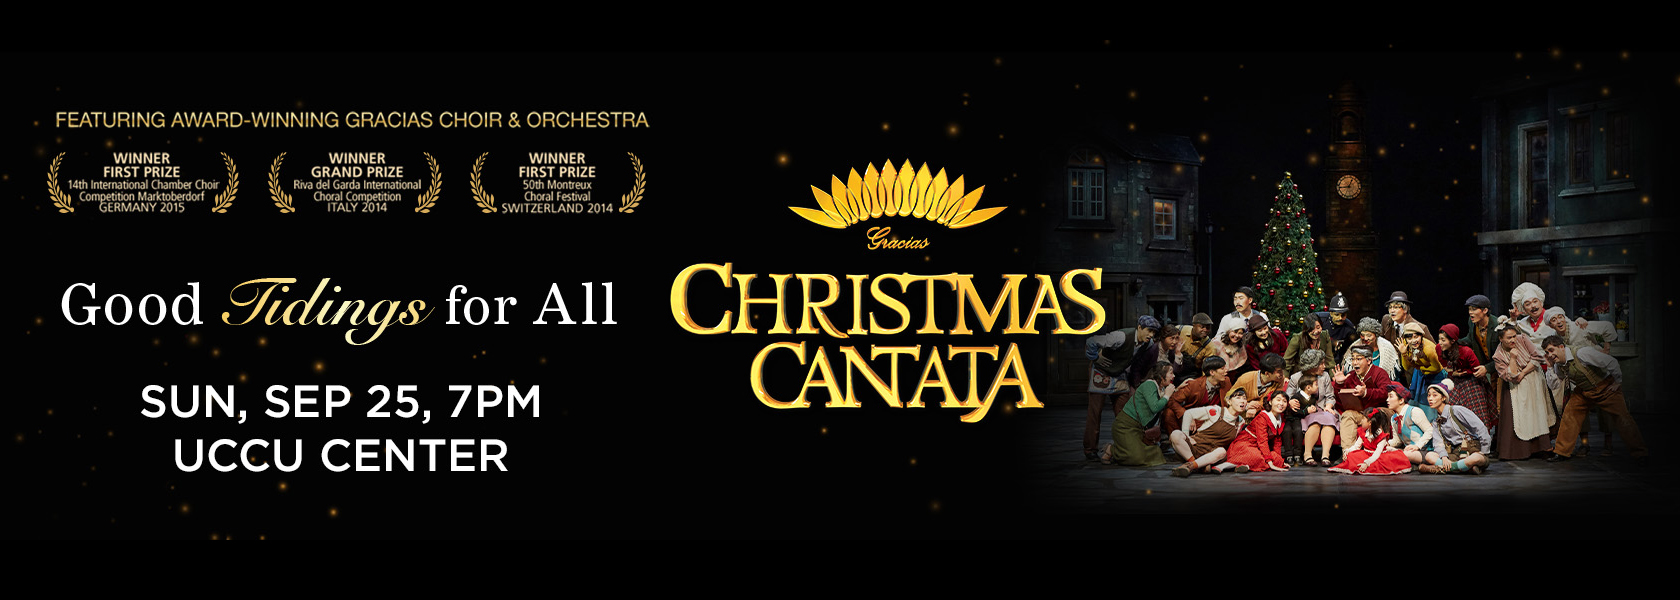 Christmas Cantata -Good Tidings For All